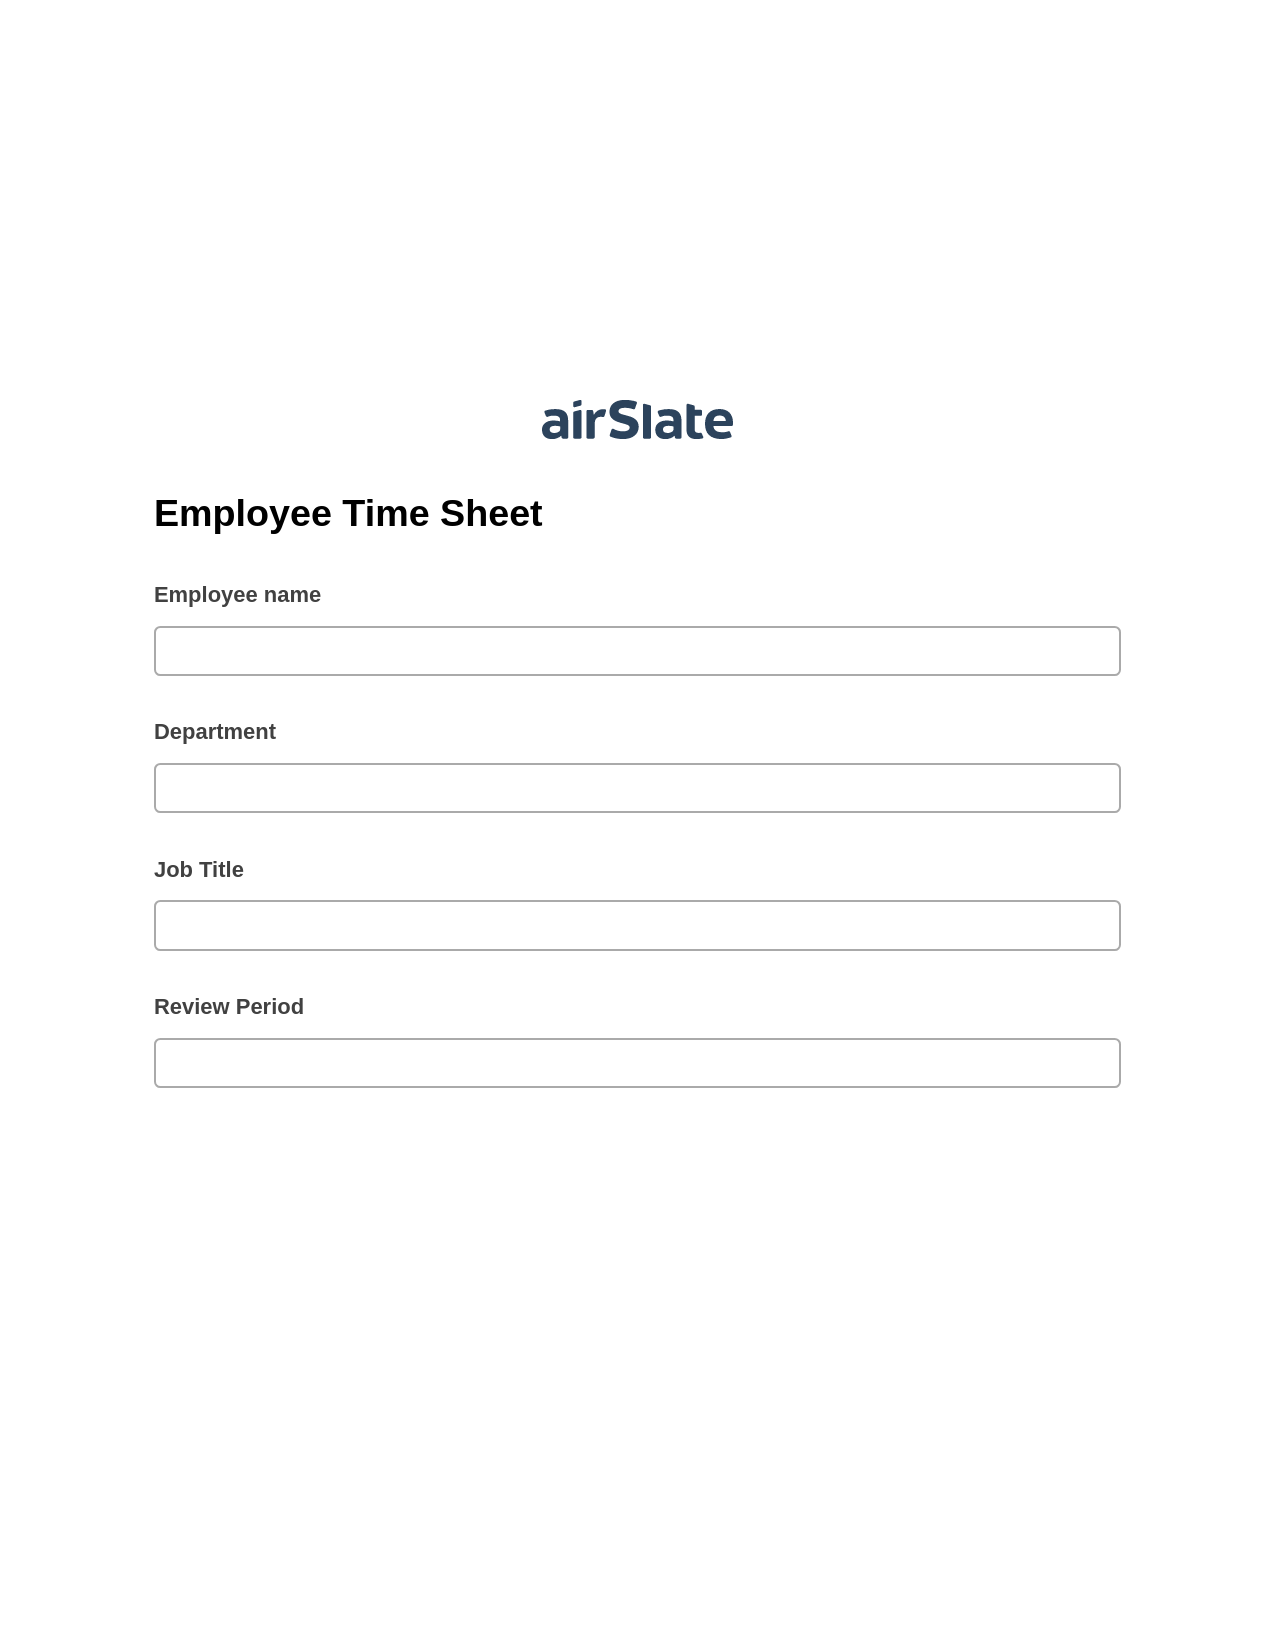 Multirole Employee Time Sheet Prefill from NetSuite records, Google Cloud Print Bot, Slack Notification Postfinish Bot